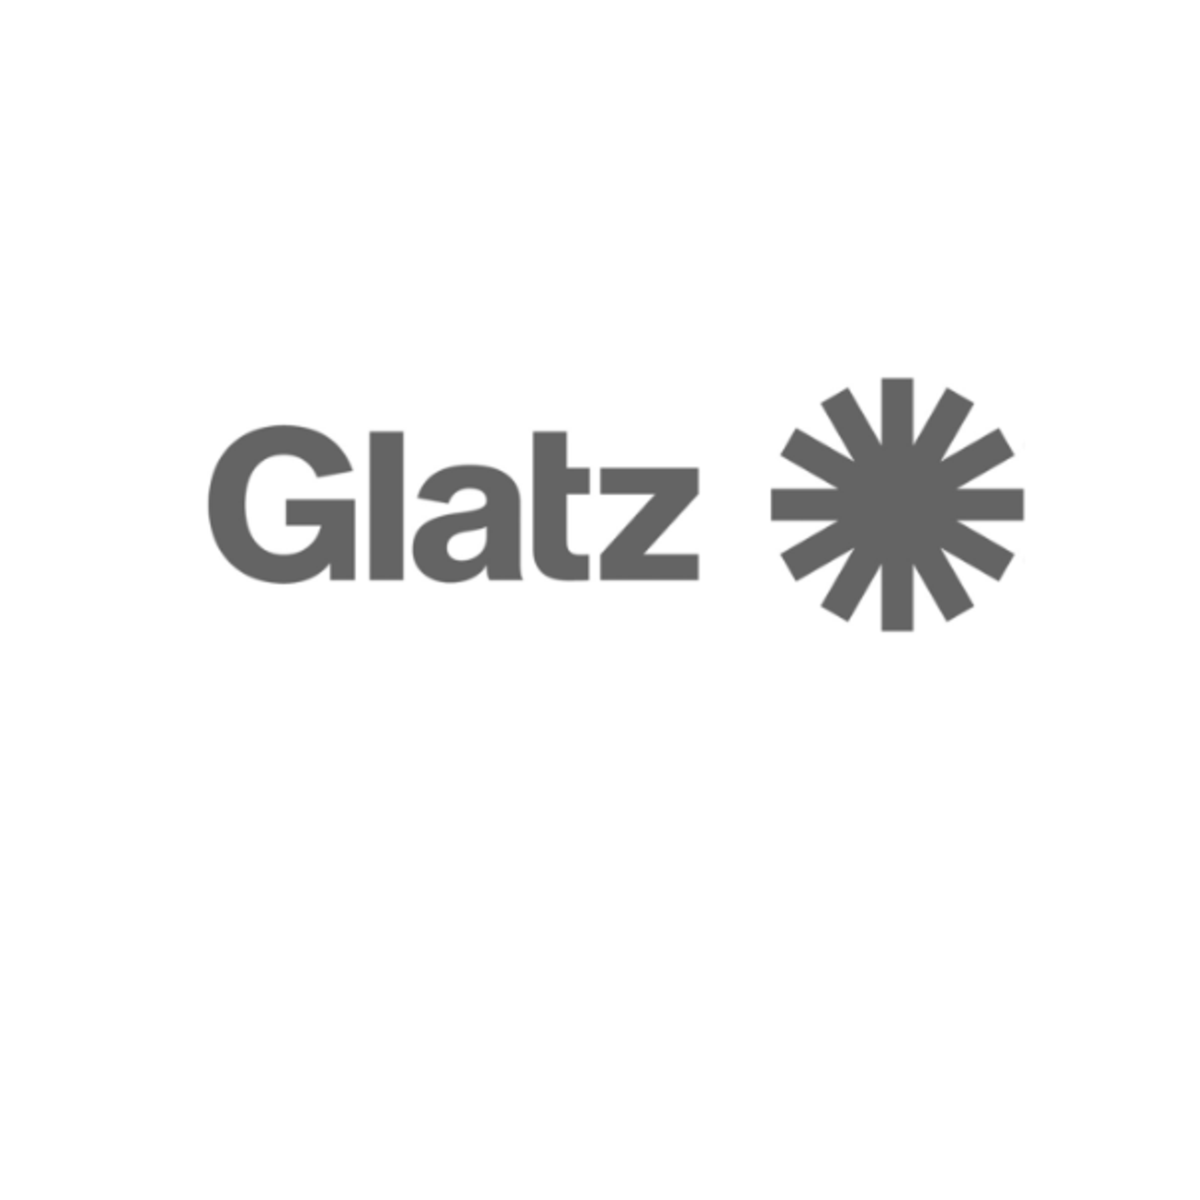 Logo Glatz